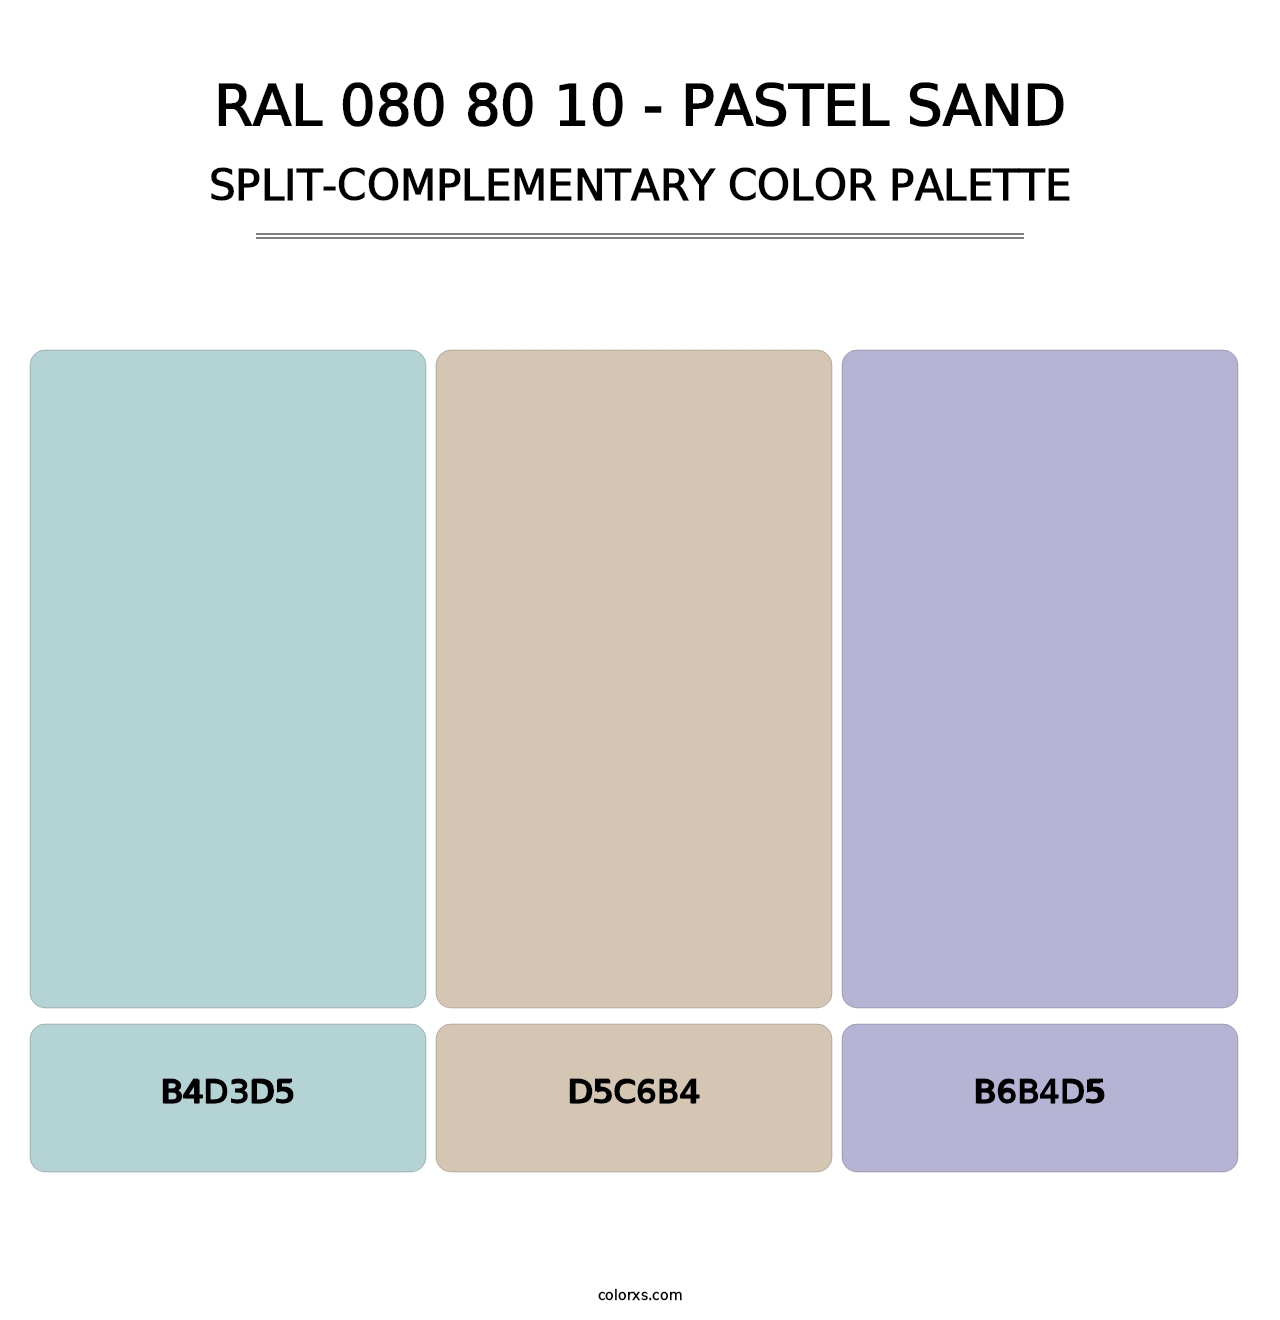 RAL 080 80 10 - Pastel Sand - Split-Complementary Color Palette